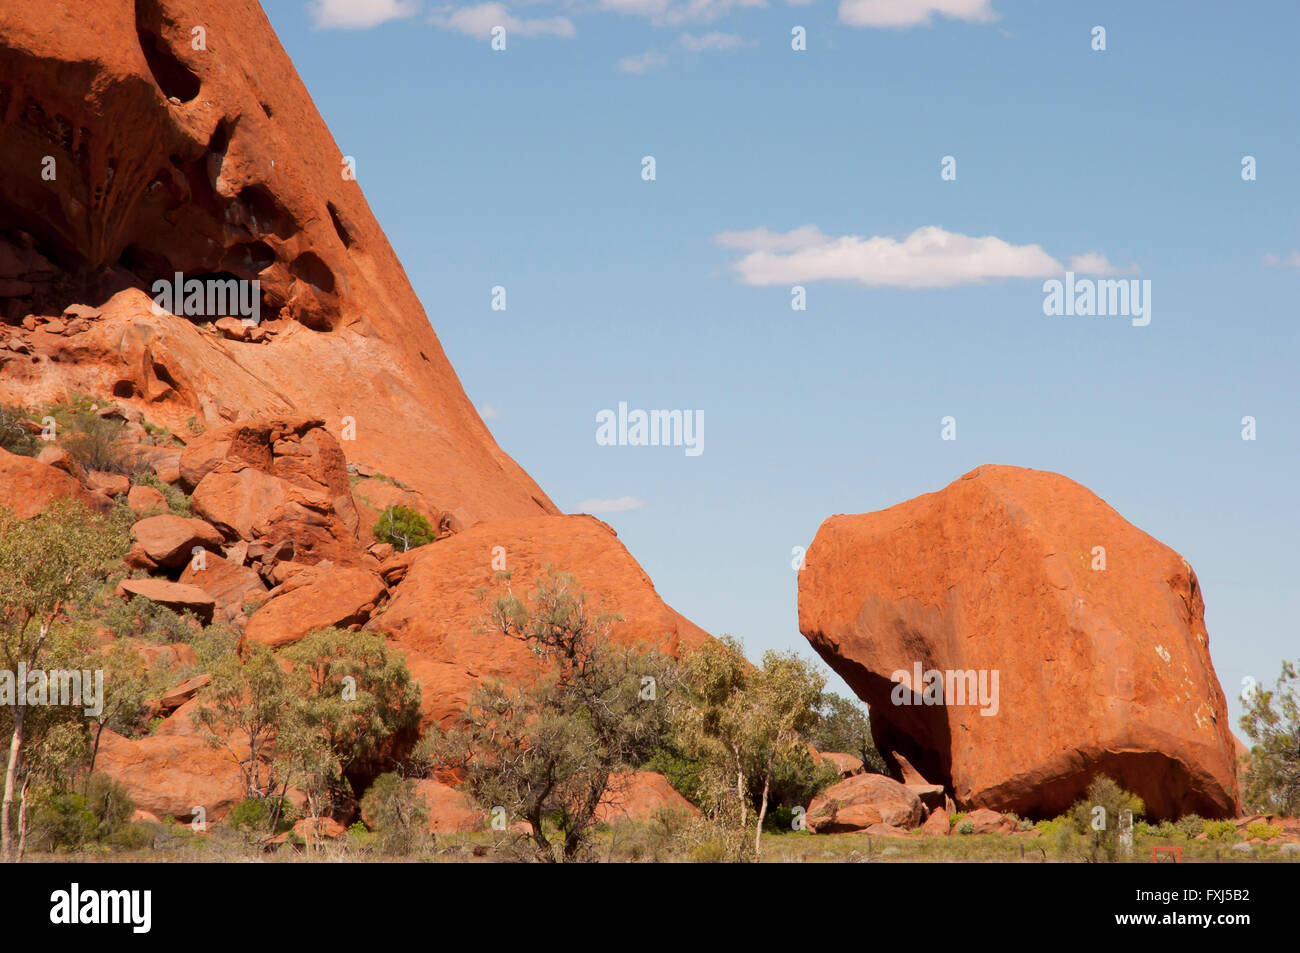 Ayers Rock - Uluru - Australie Banque D'Images